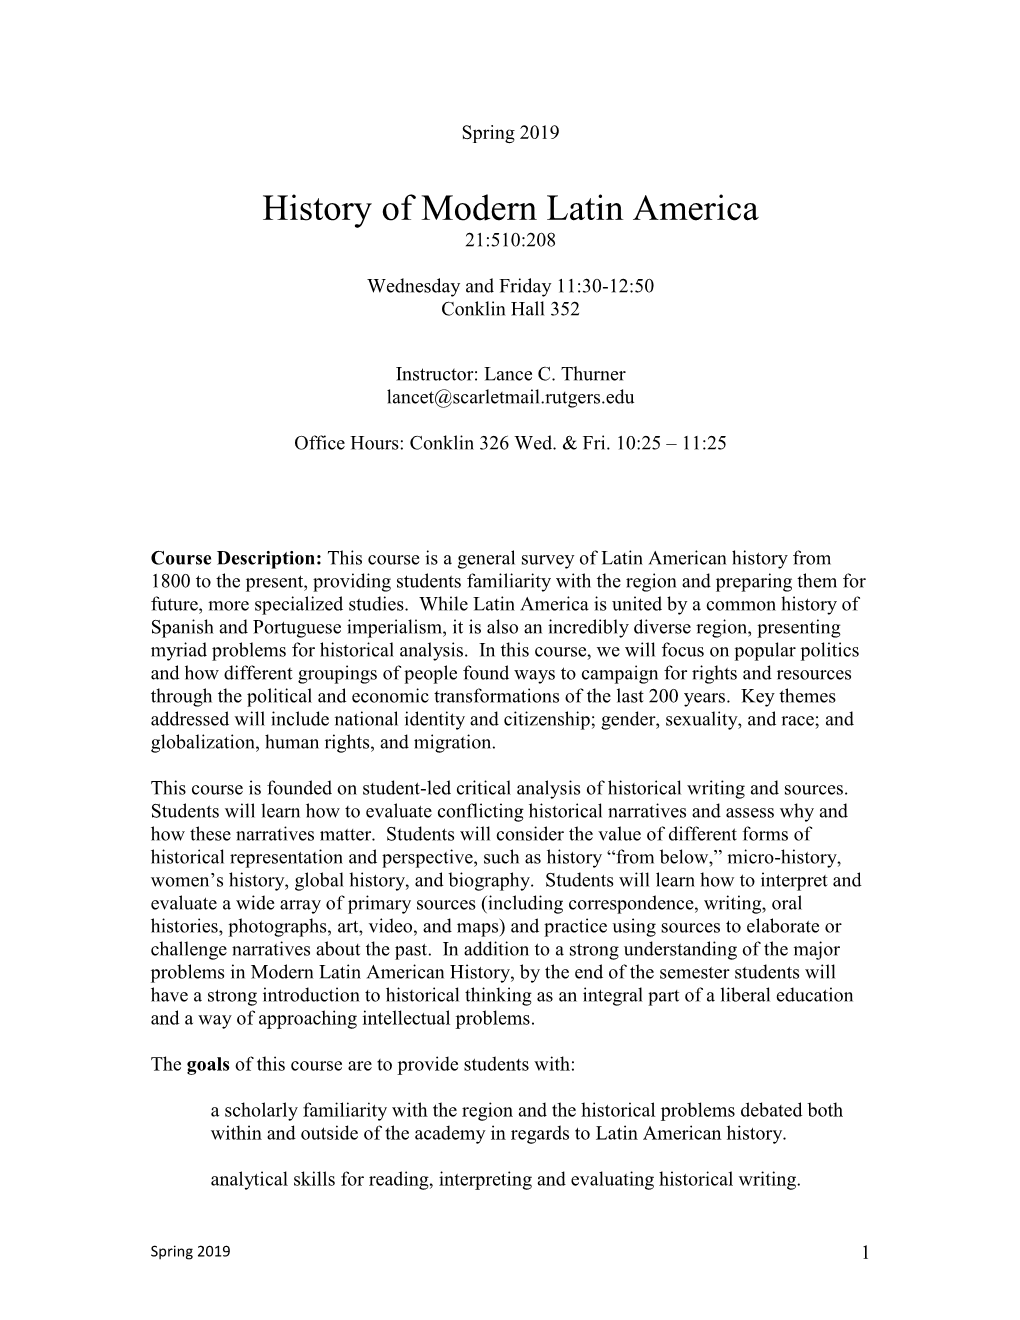 History of Modern Latin America 21:510:208